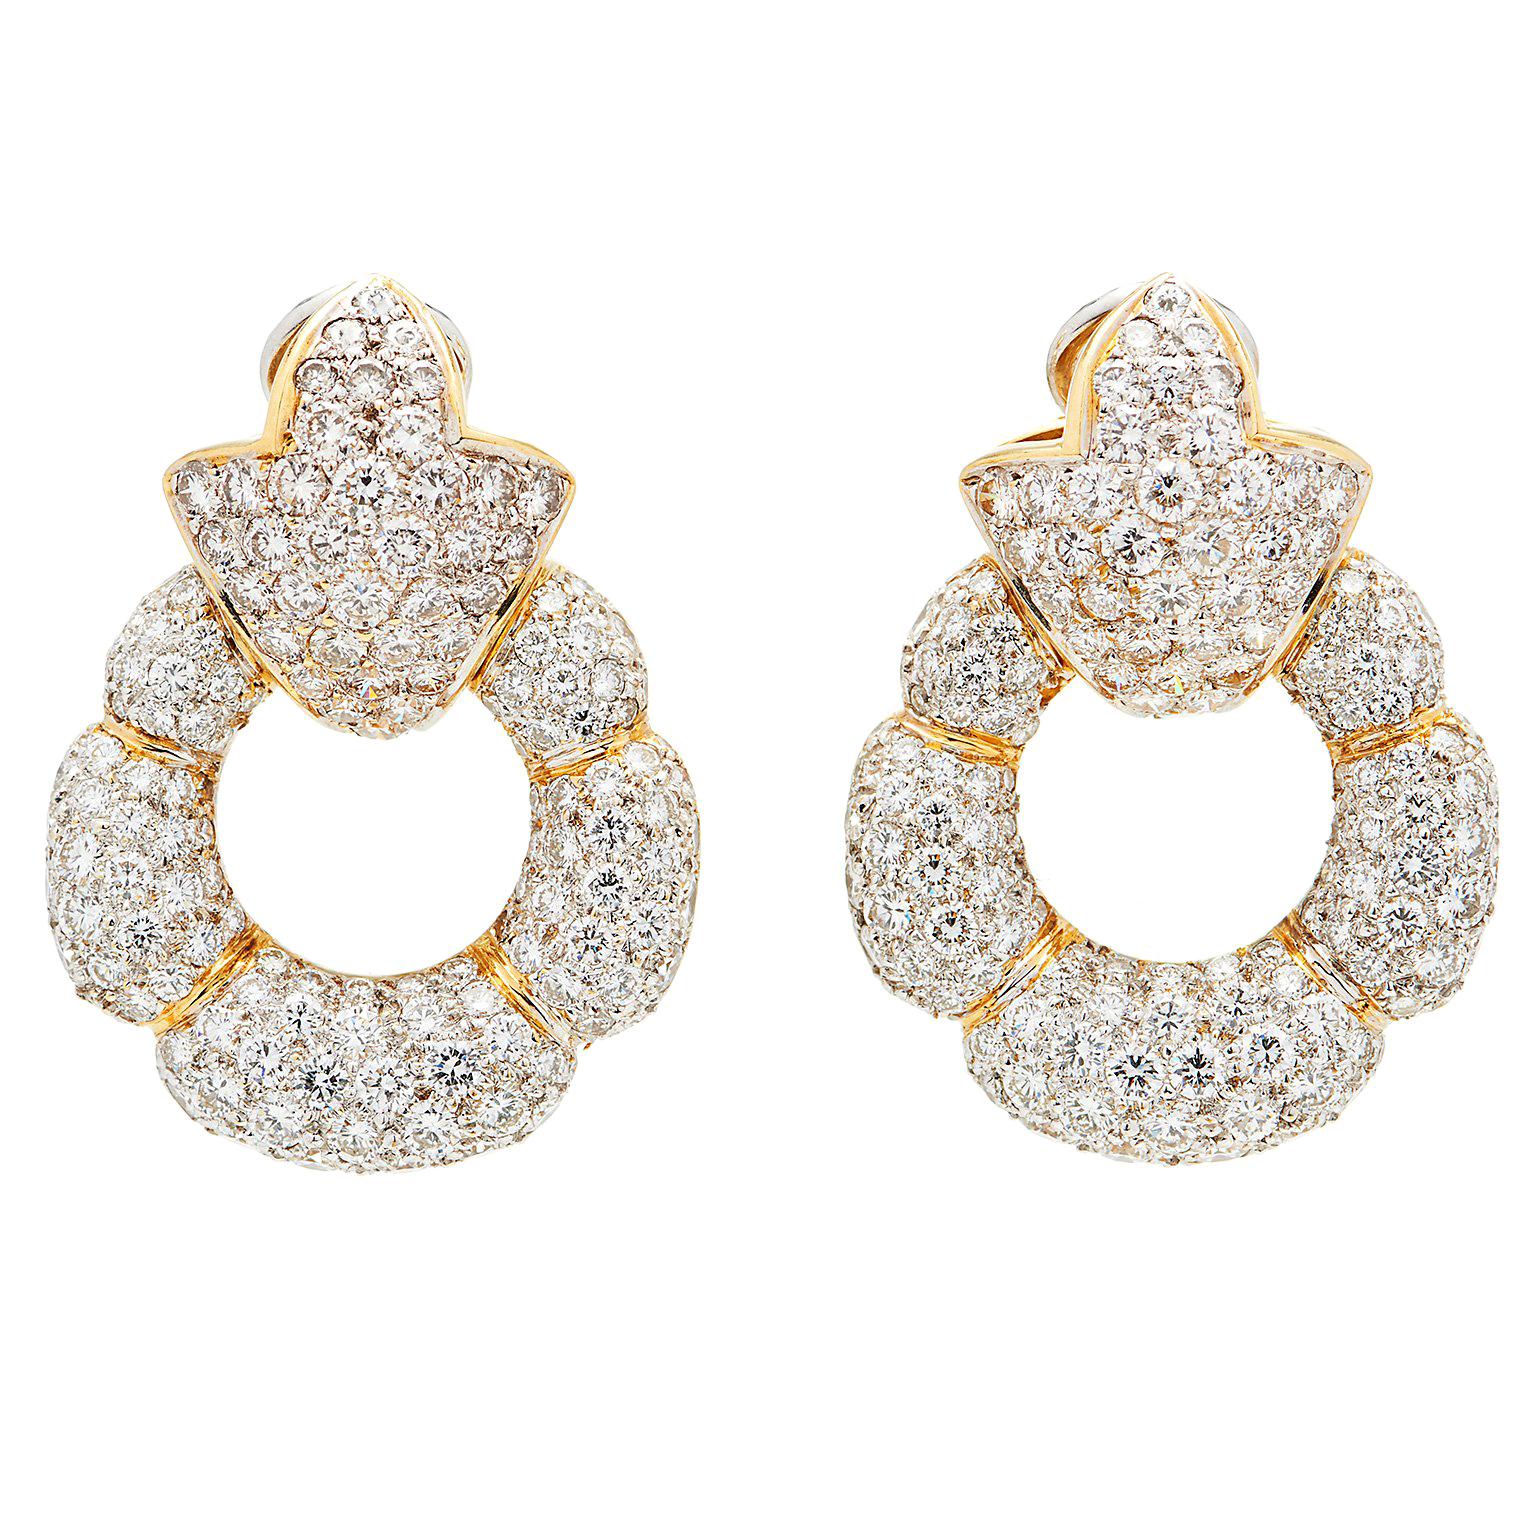 12 Carat Diamond 18k Gold Door Knocker Earrings